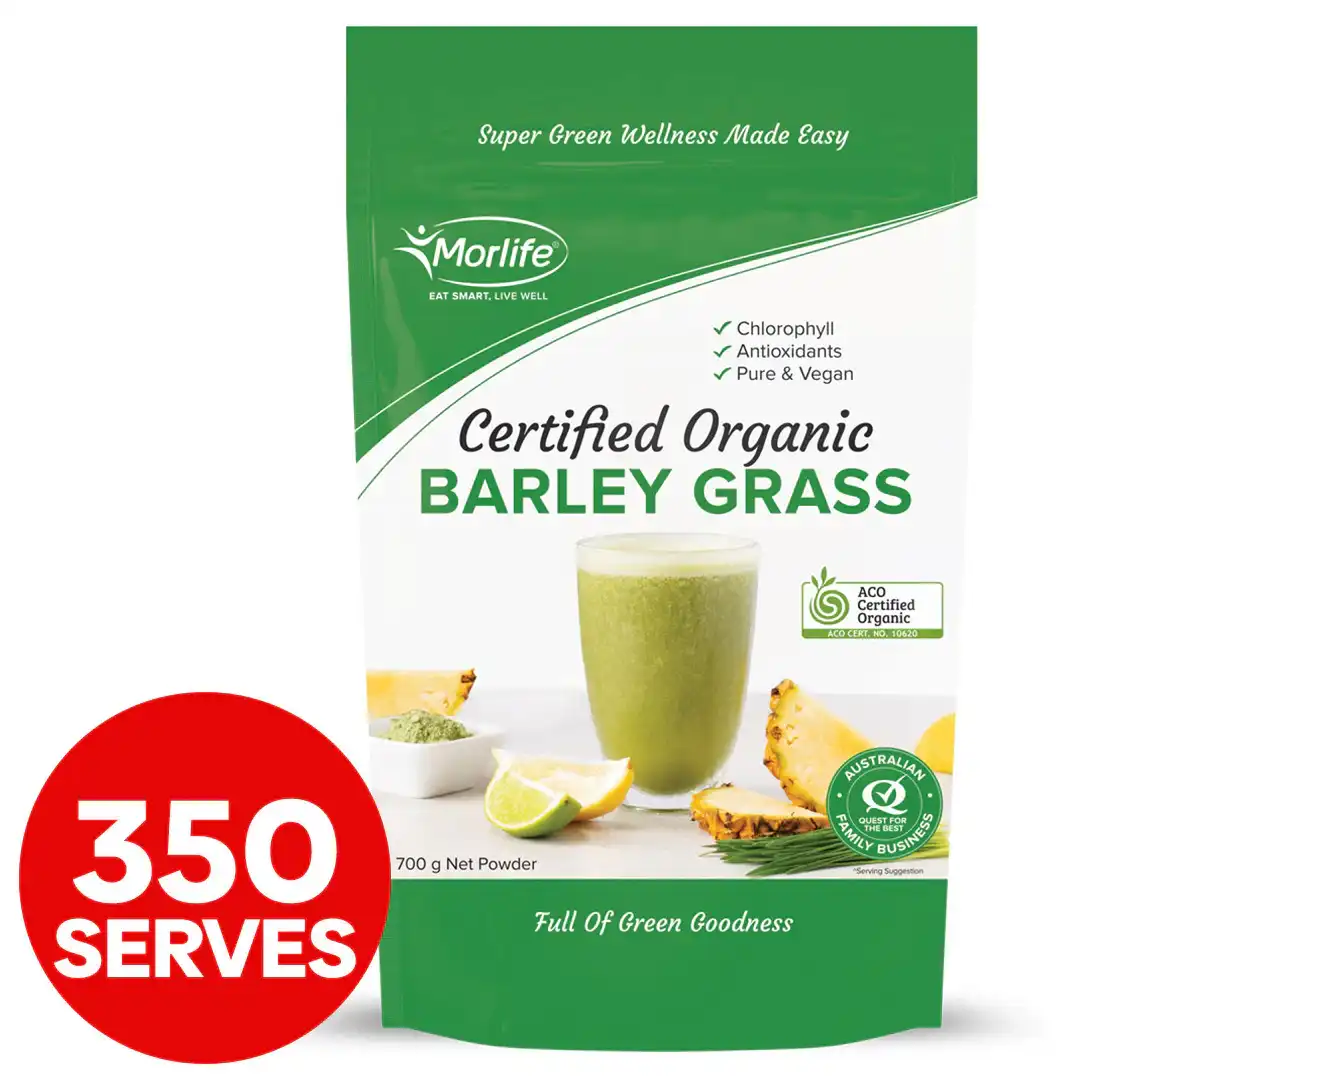 Morlife Organic Barley Grass Powder 700g / 350 Serves $35.96(was $44.95, Save 20% OFF) at Catch